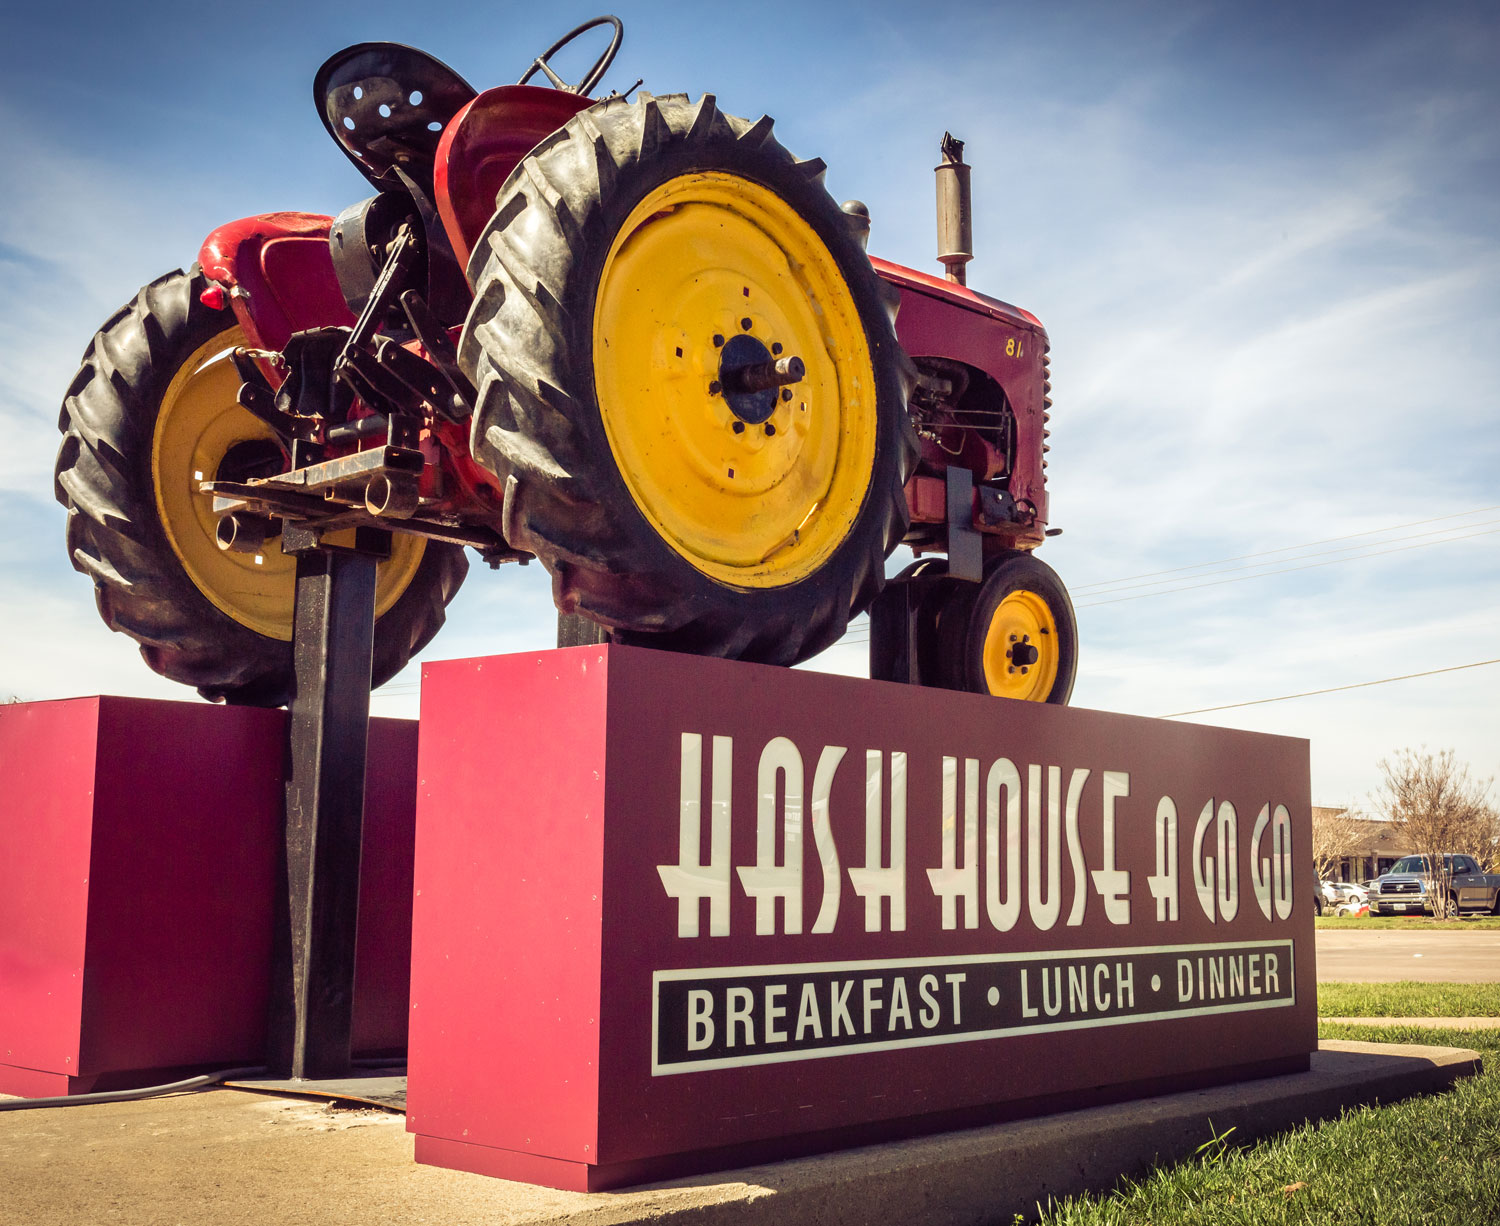 Hash-House-A-Go-Go-Brunch-Breakfast-Patio-Restaurant-Plano-Magazine-Tractor